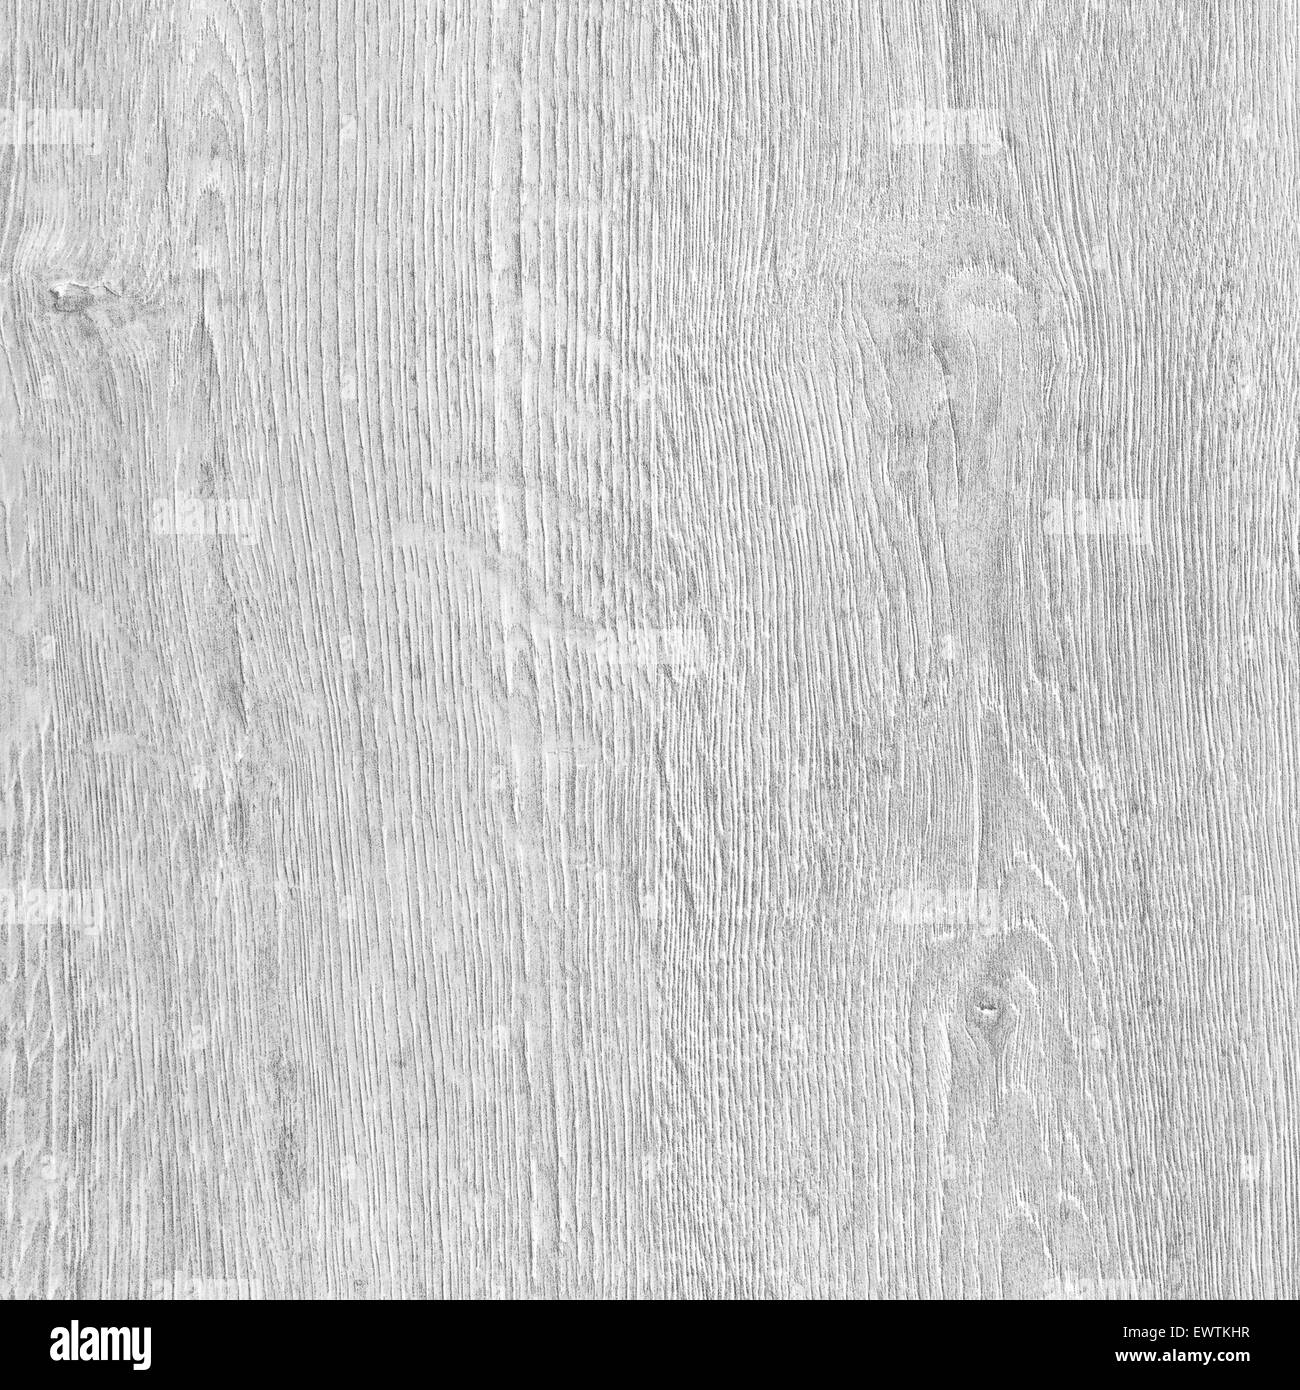 white wood background or oak furniture texture Stock Photo